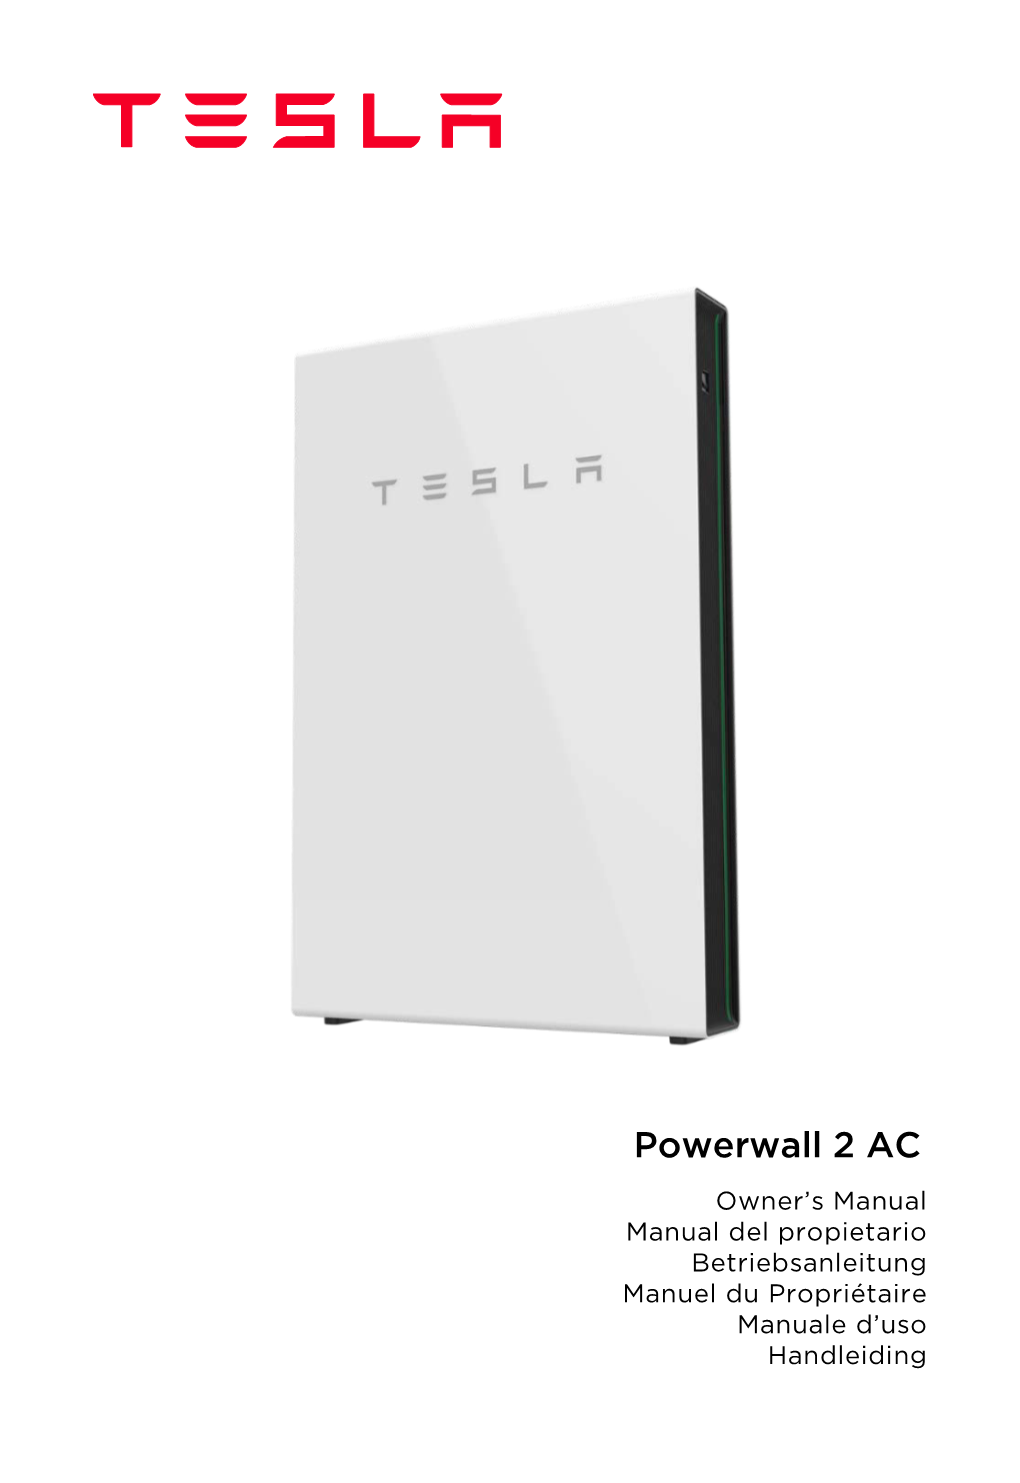 Powerwall 2 AC Owner's Manual